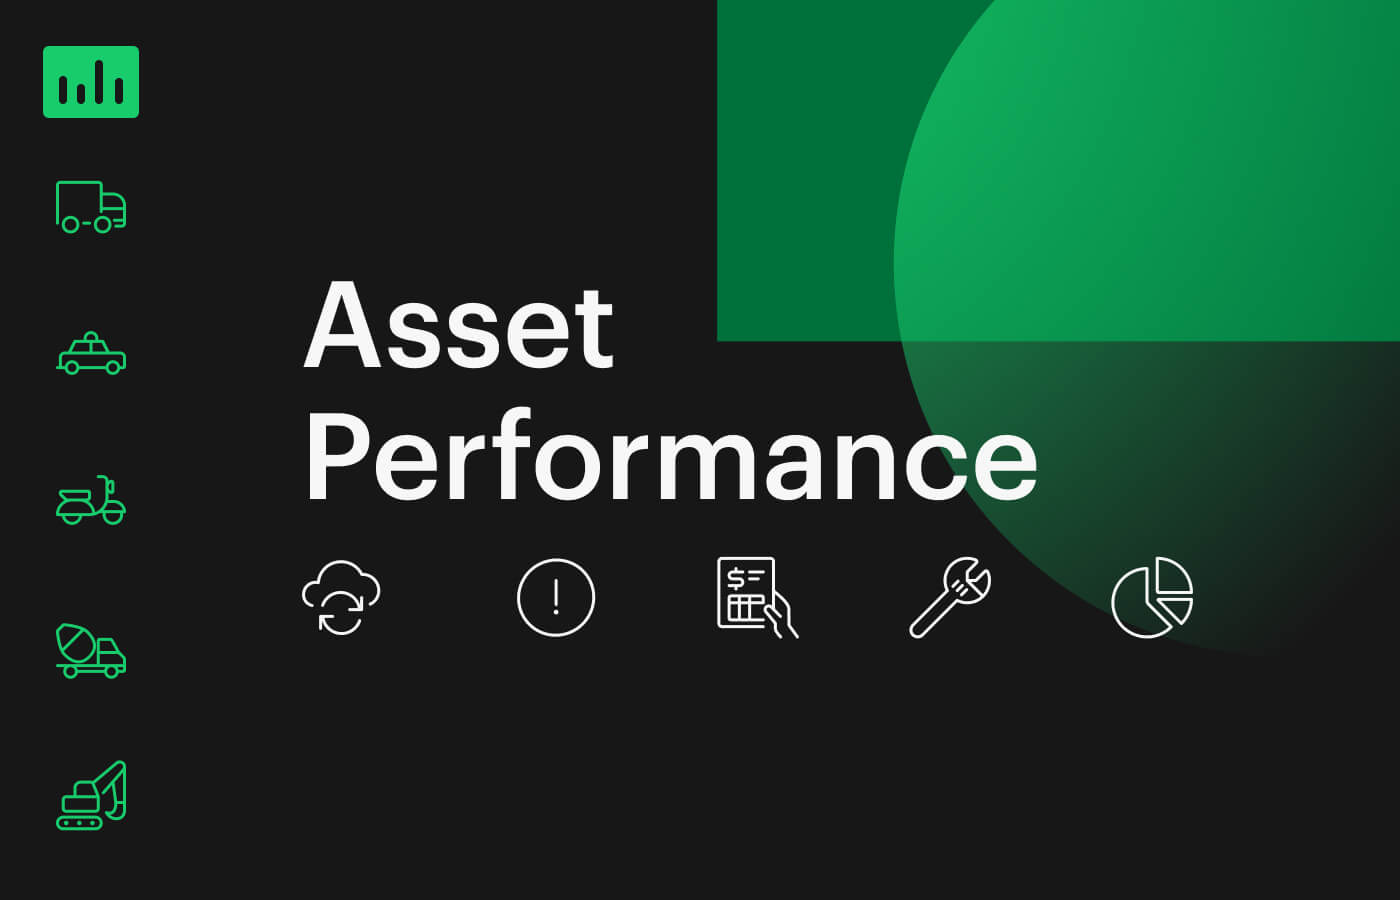 Asset performance